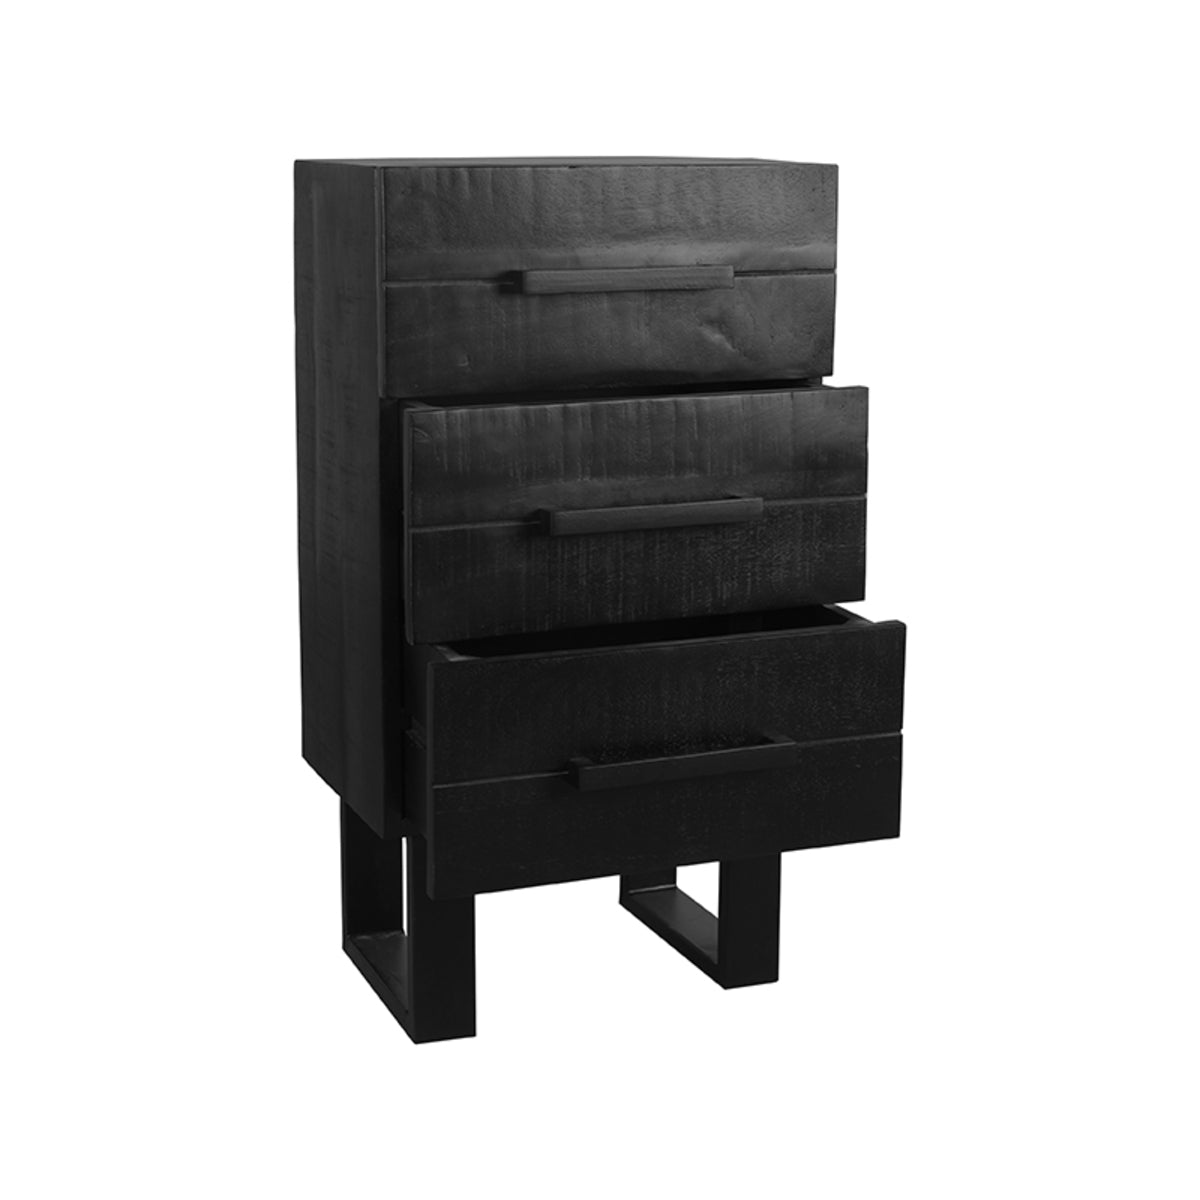 LABEL51 Santos chest of drawers - Black - Mango wood